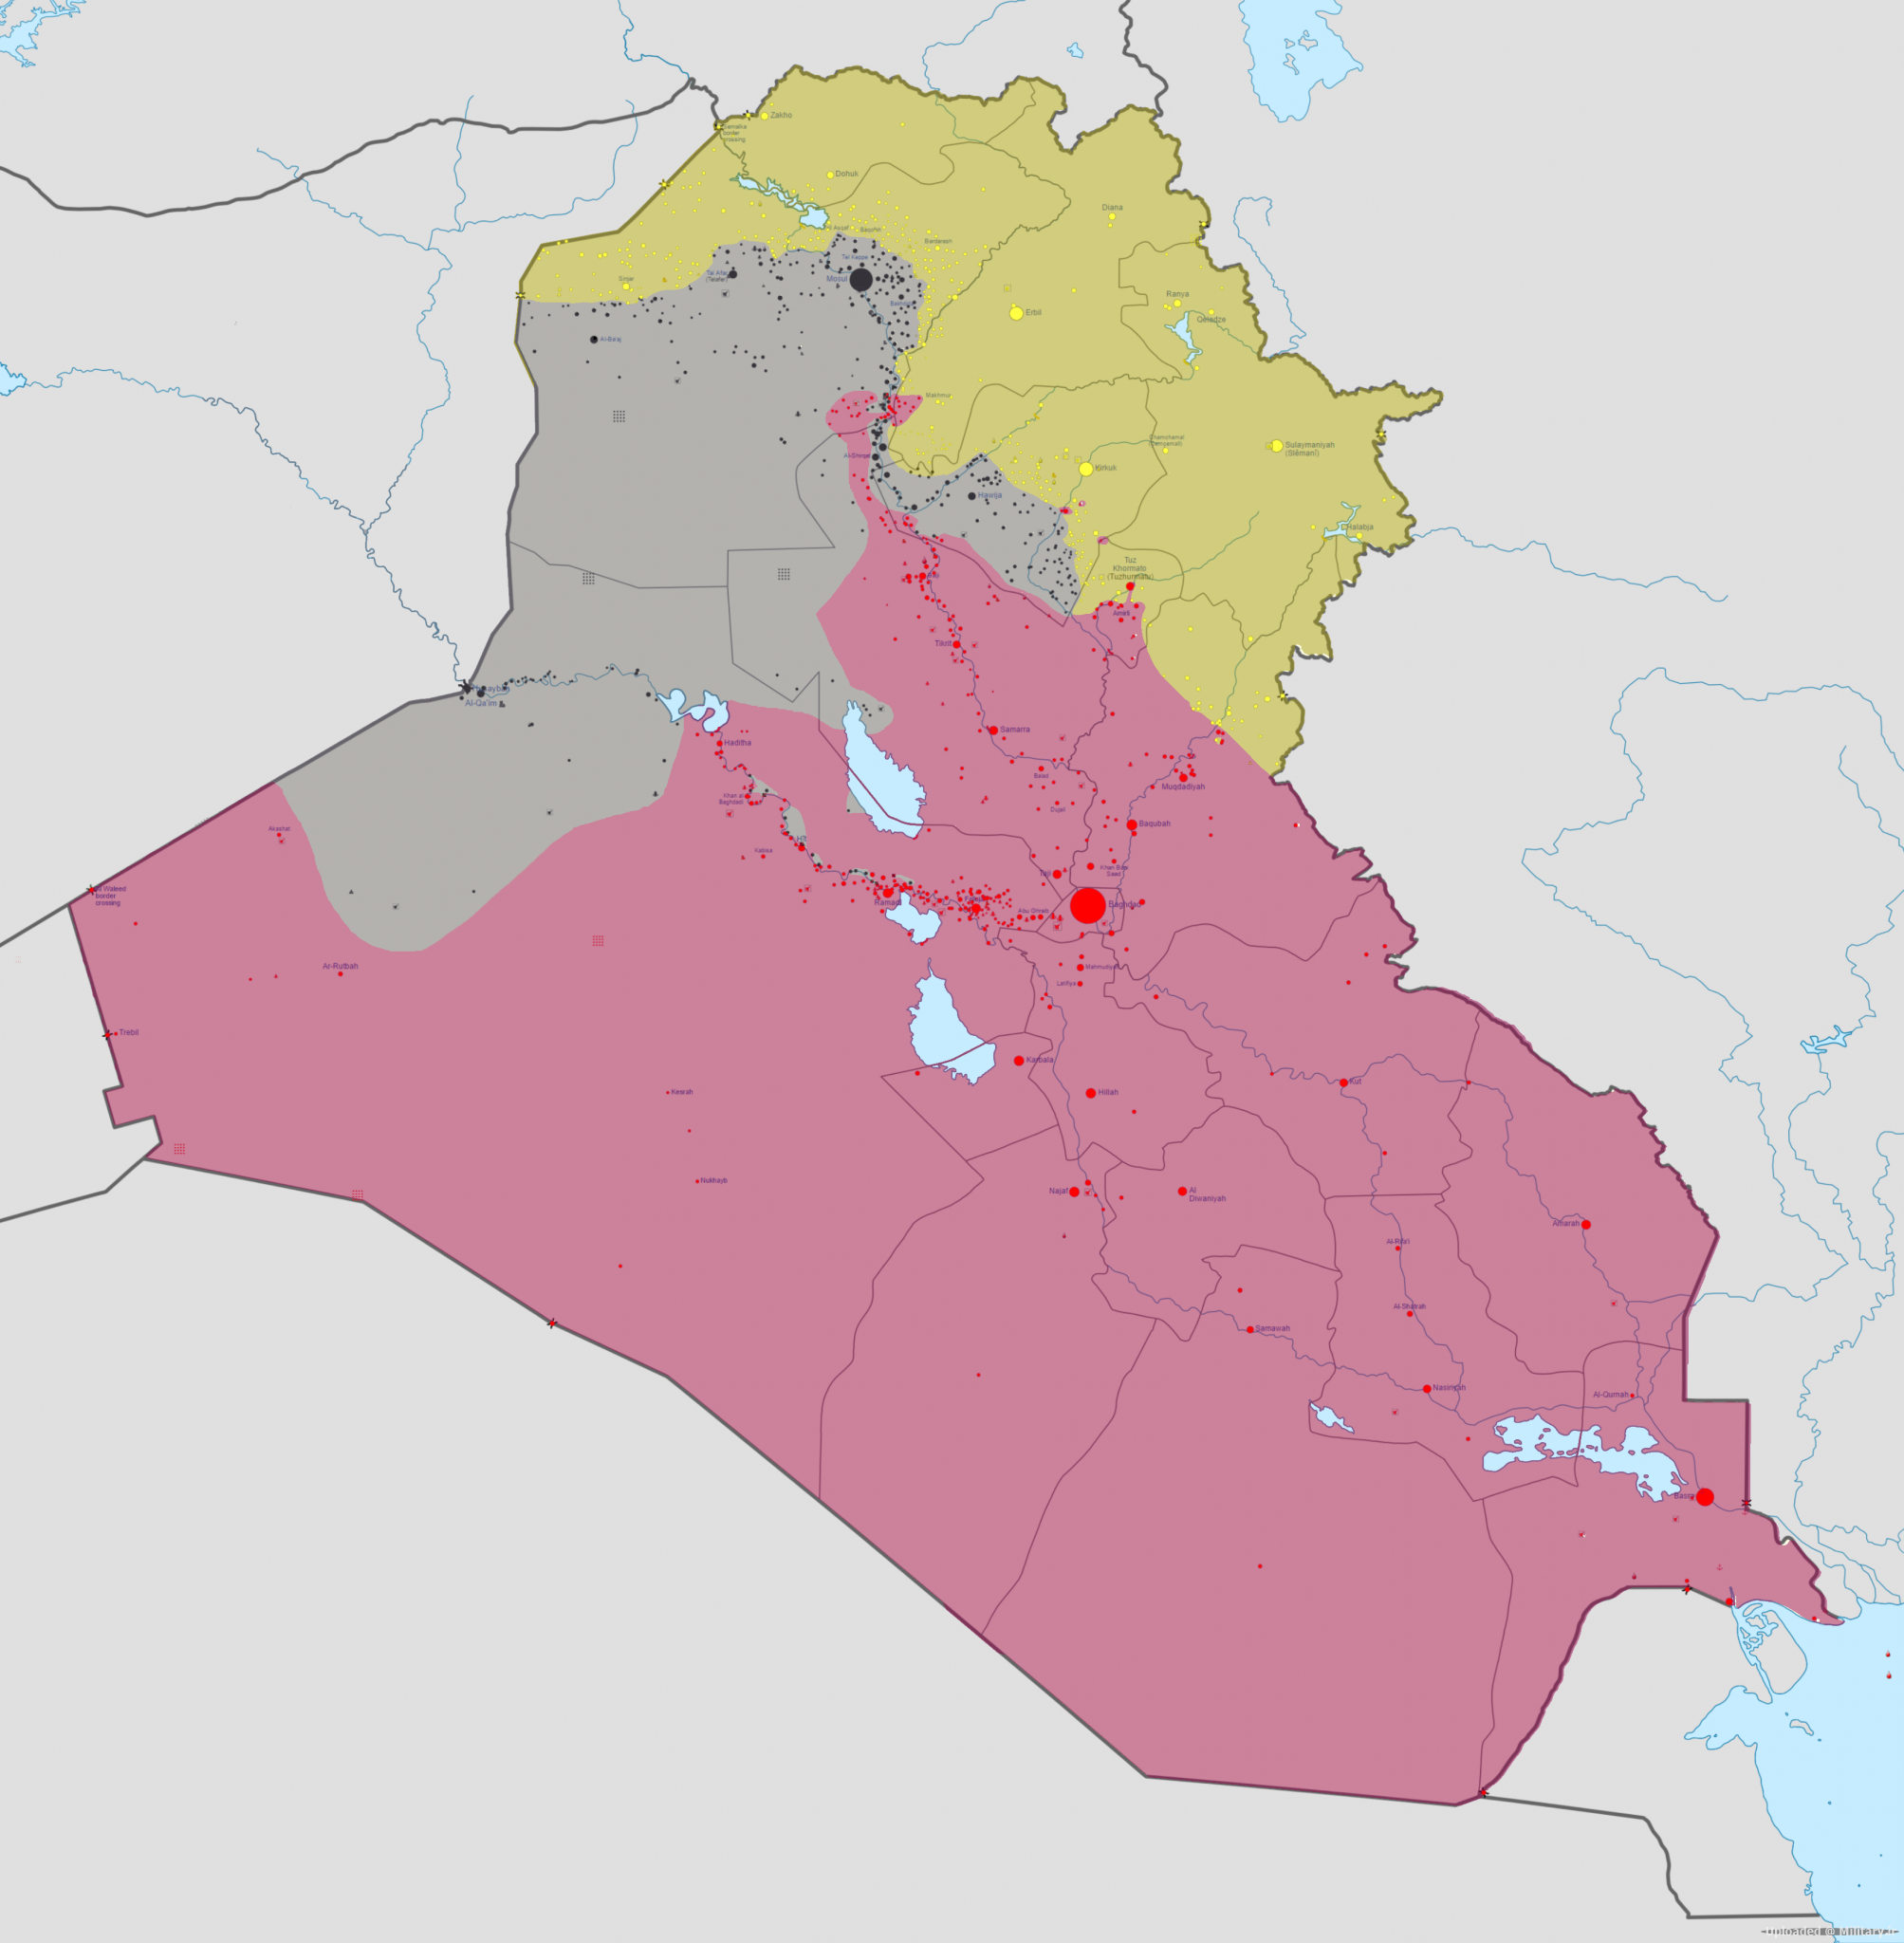 Iraq_war_map.png